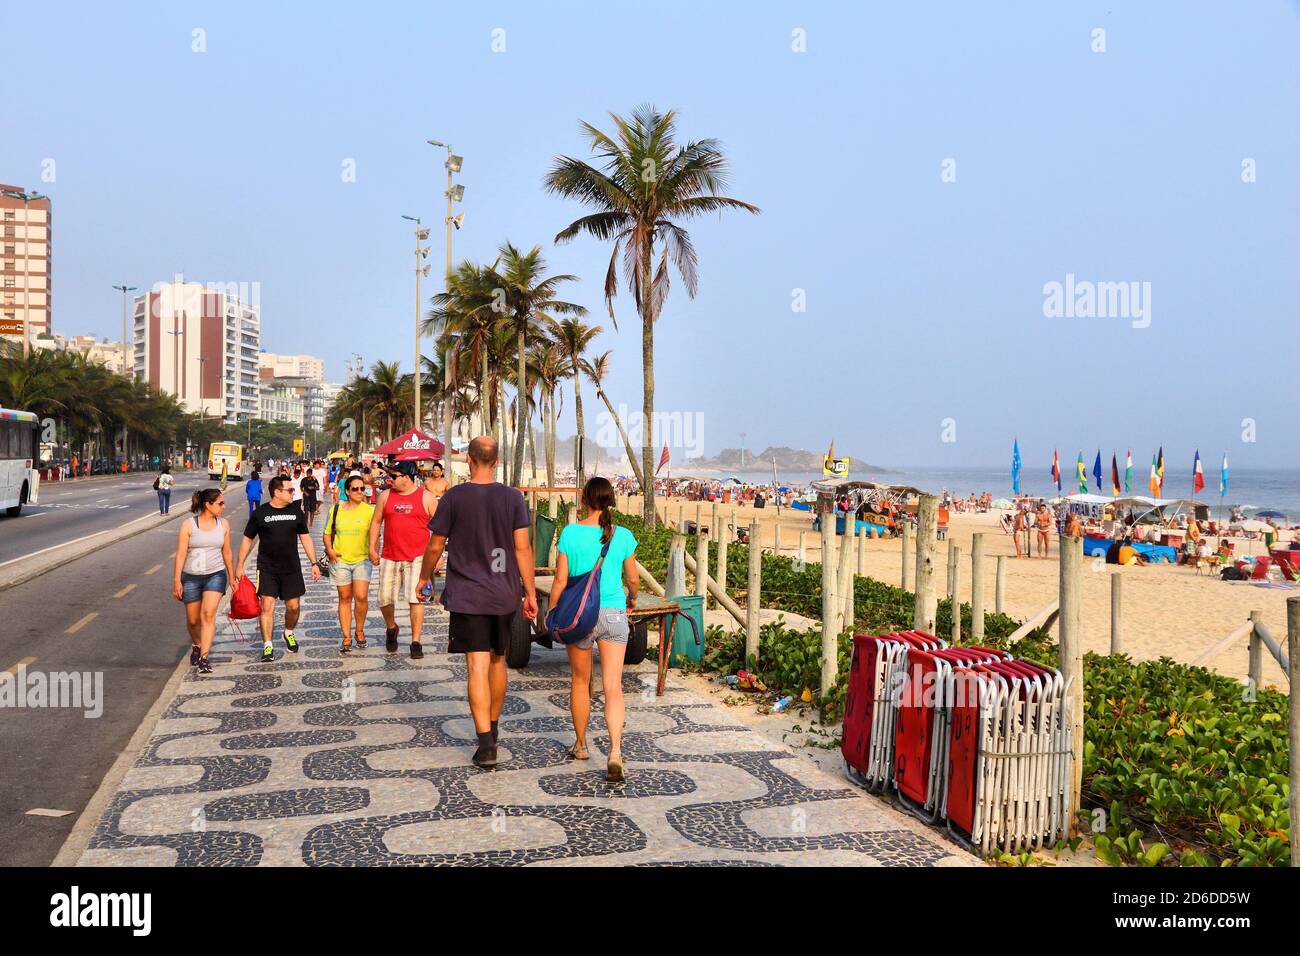 RIO DE JANEIRO, BRAZIL - OCTOBER 18, 2014: People visit Ipanema beachfront walk in Rio de Janeiro. In 2013 1.6 million international tourists visited Stock Photo